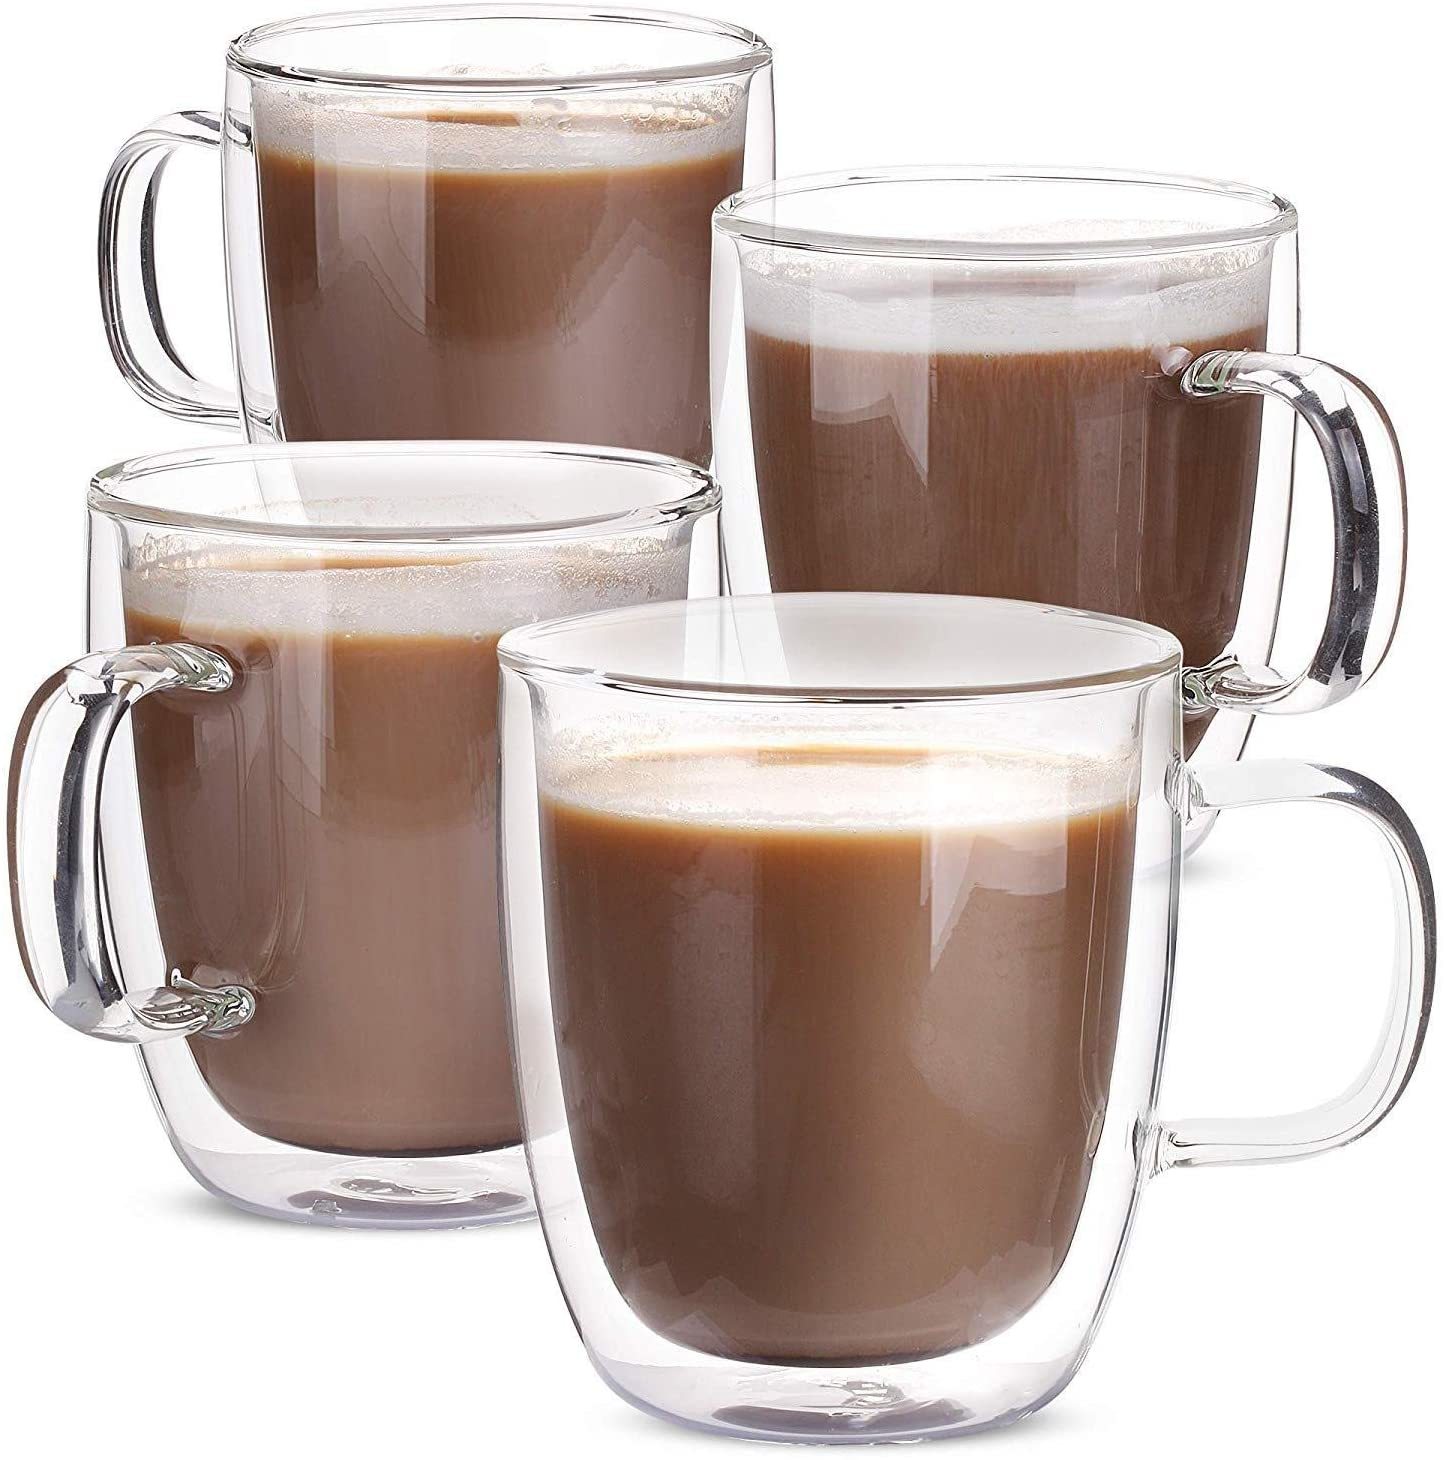 Cappuccino 12oz Glasss Coffee Cups Double Wall Glass Coffee Mugs with Wide Handle Coffee or Tea Mugs by Ingeware Set of 2 Clear Coffee Mug Set Latte Espresso 